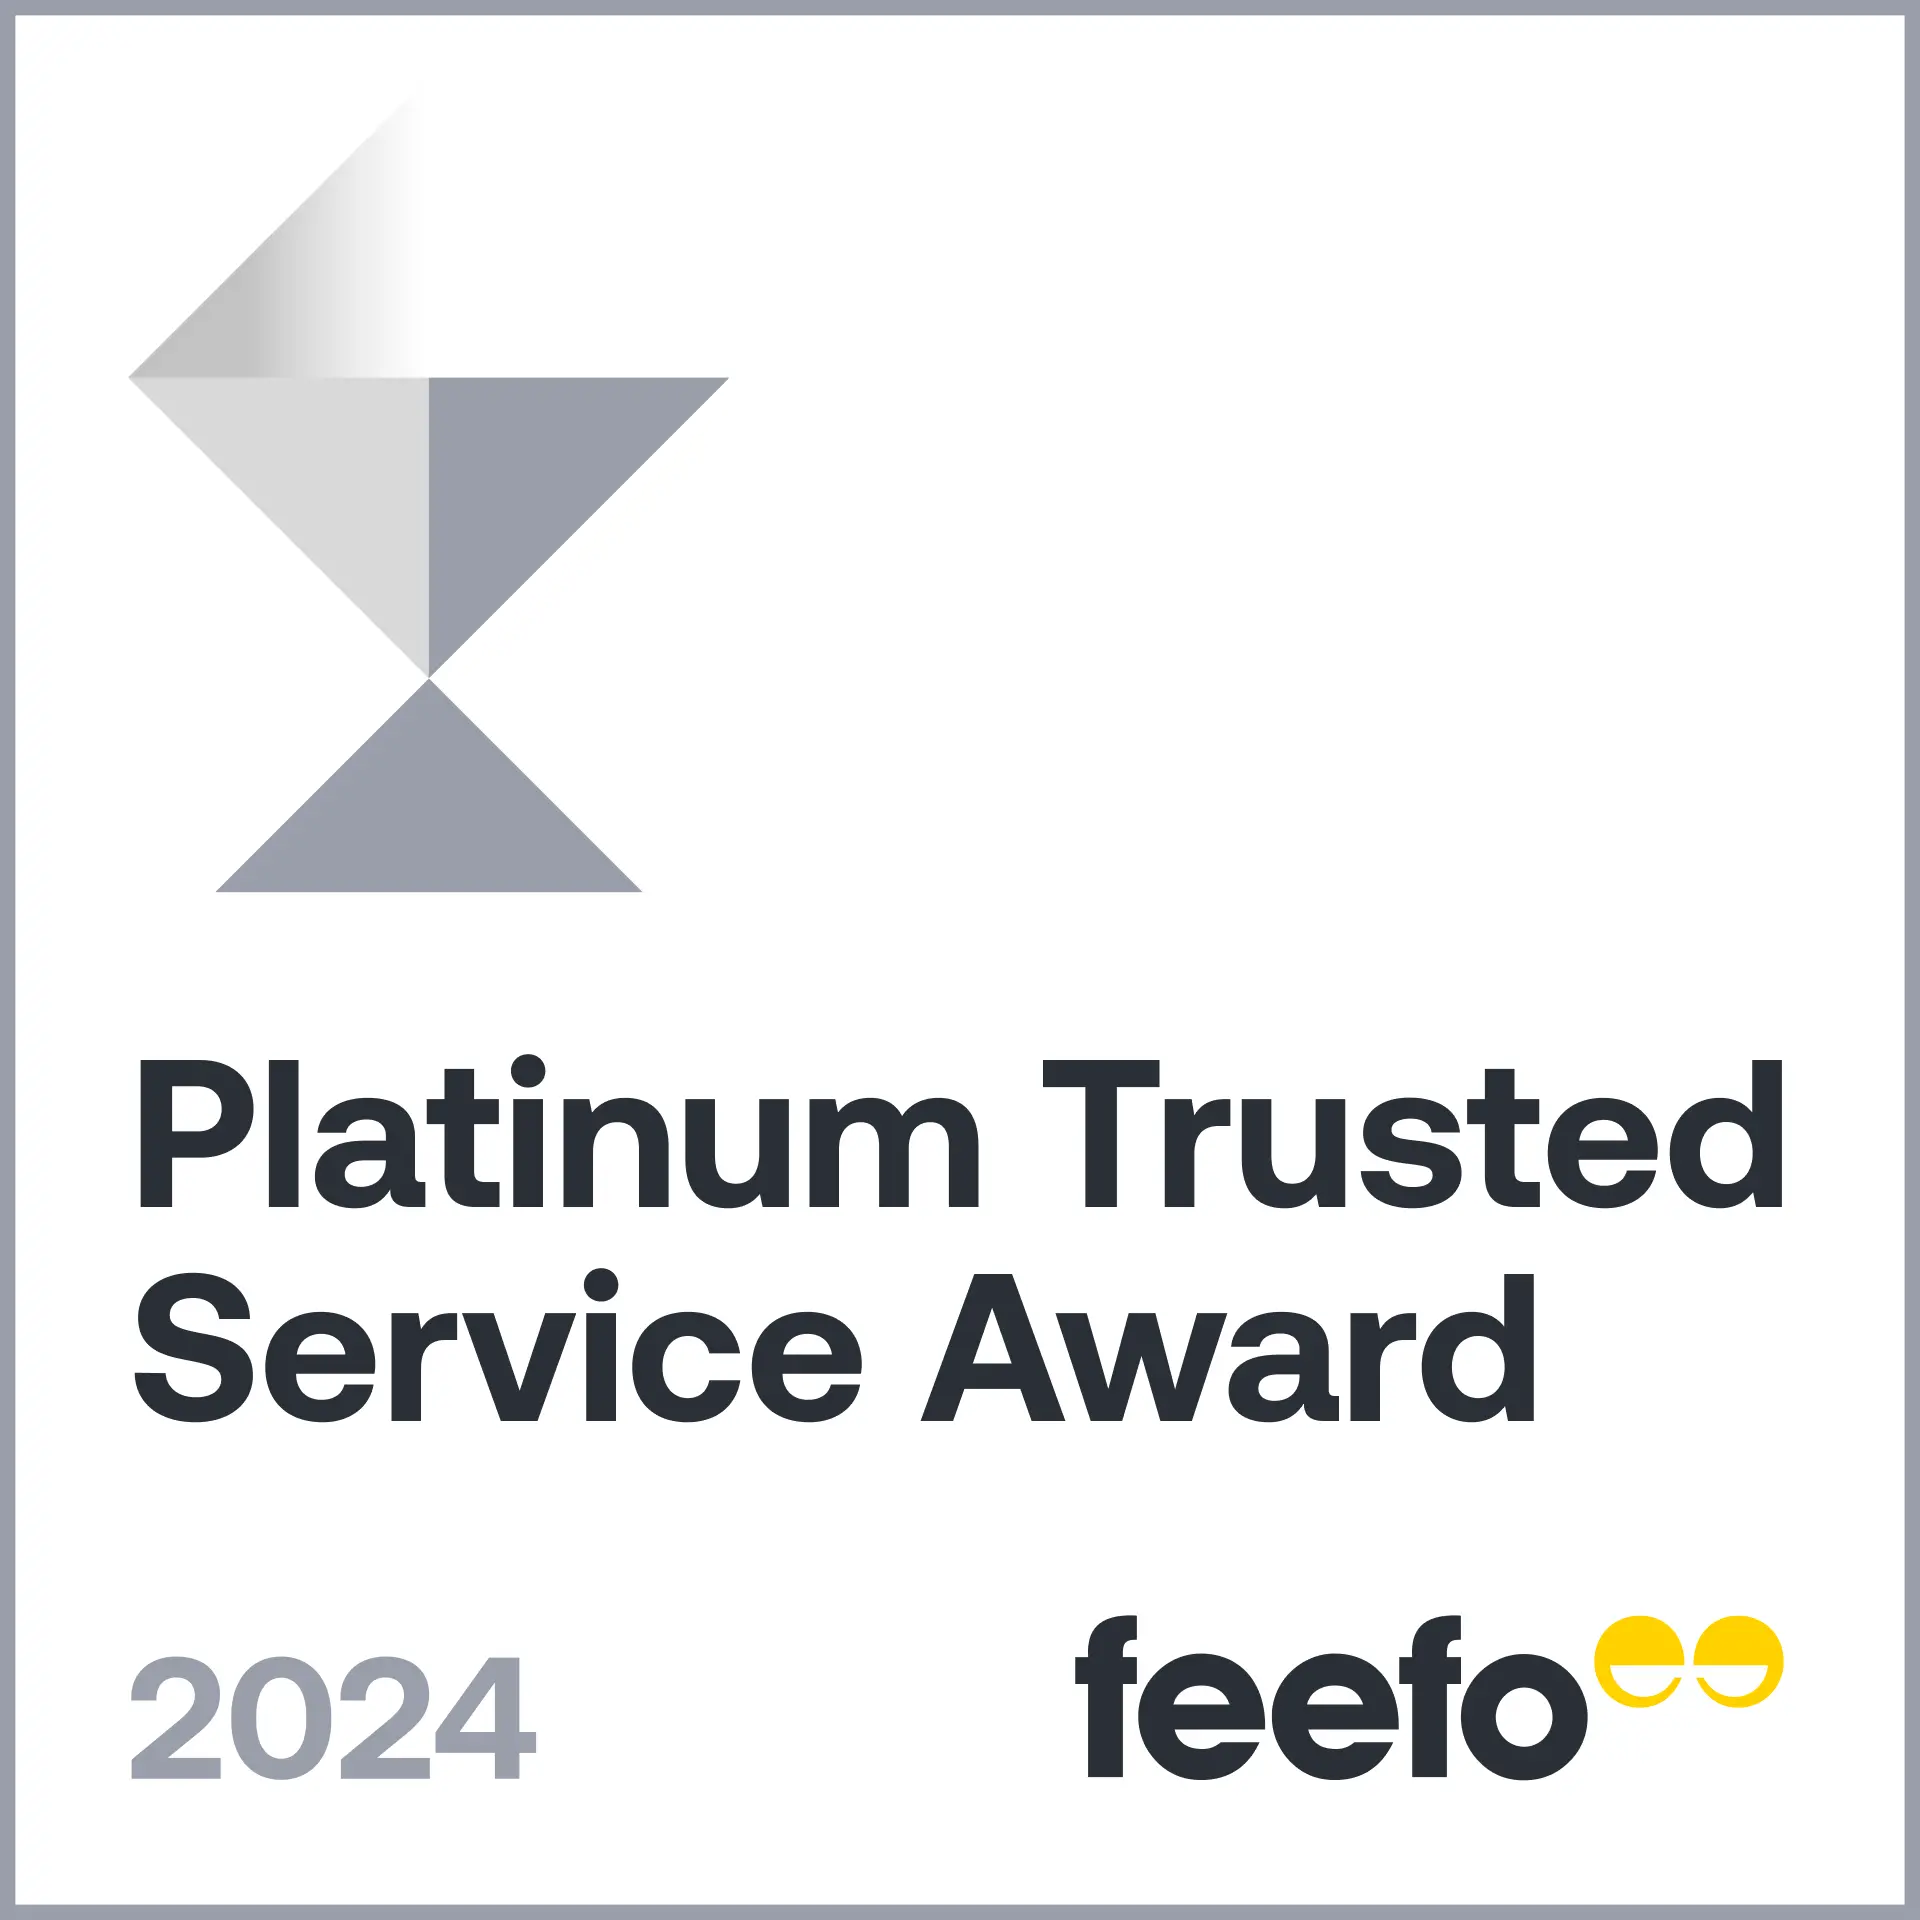 Platinum Trusted Service Award Image